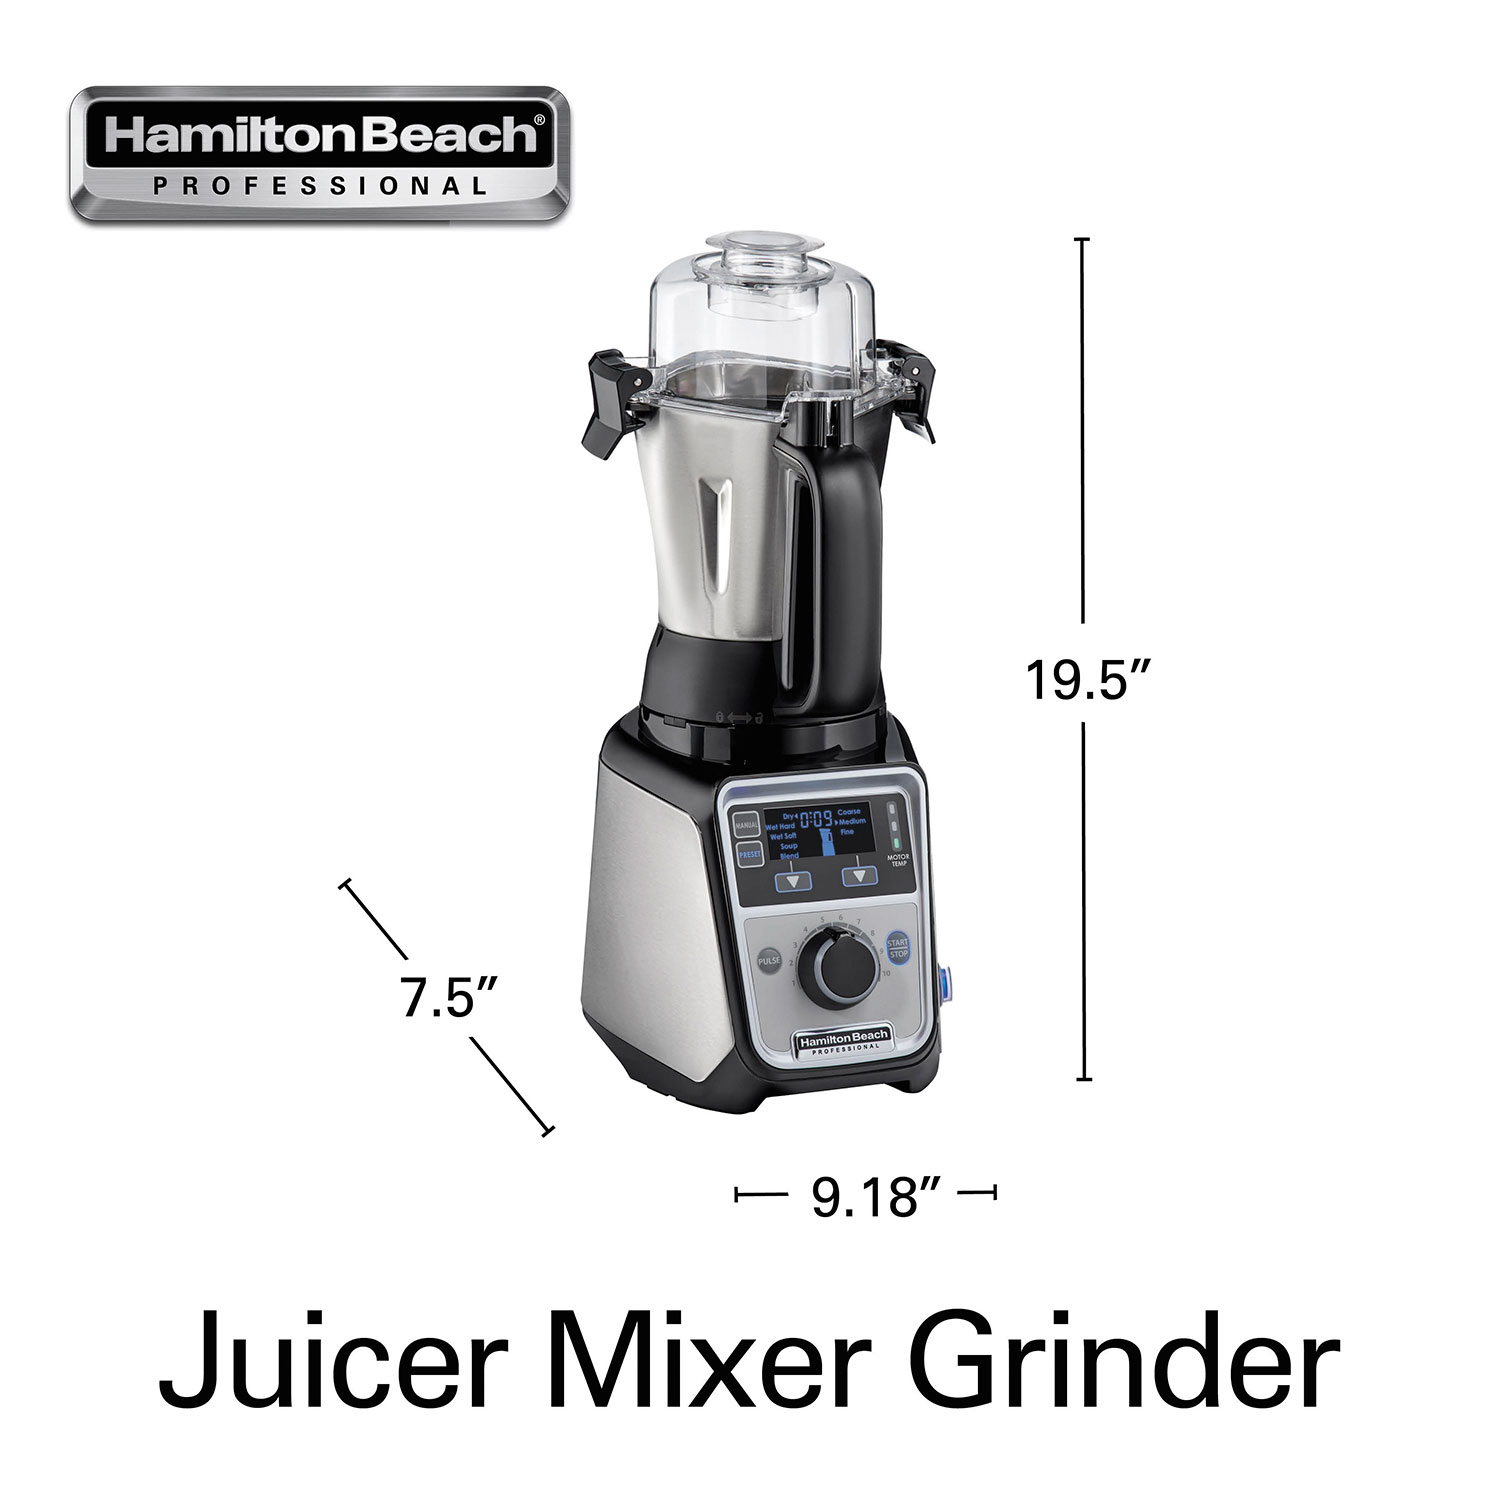 How to use Hamilton Beach Professional Juicer Mixer Grinder 